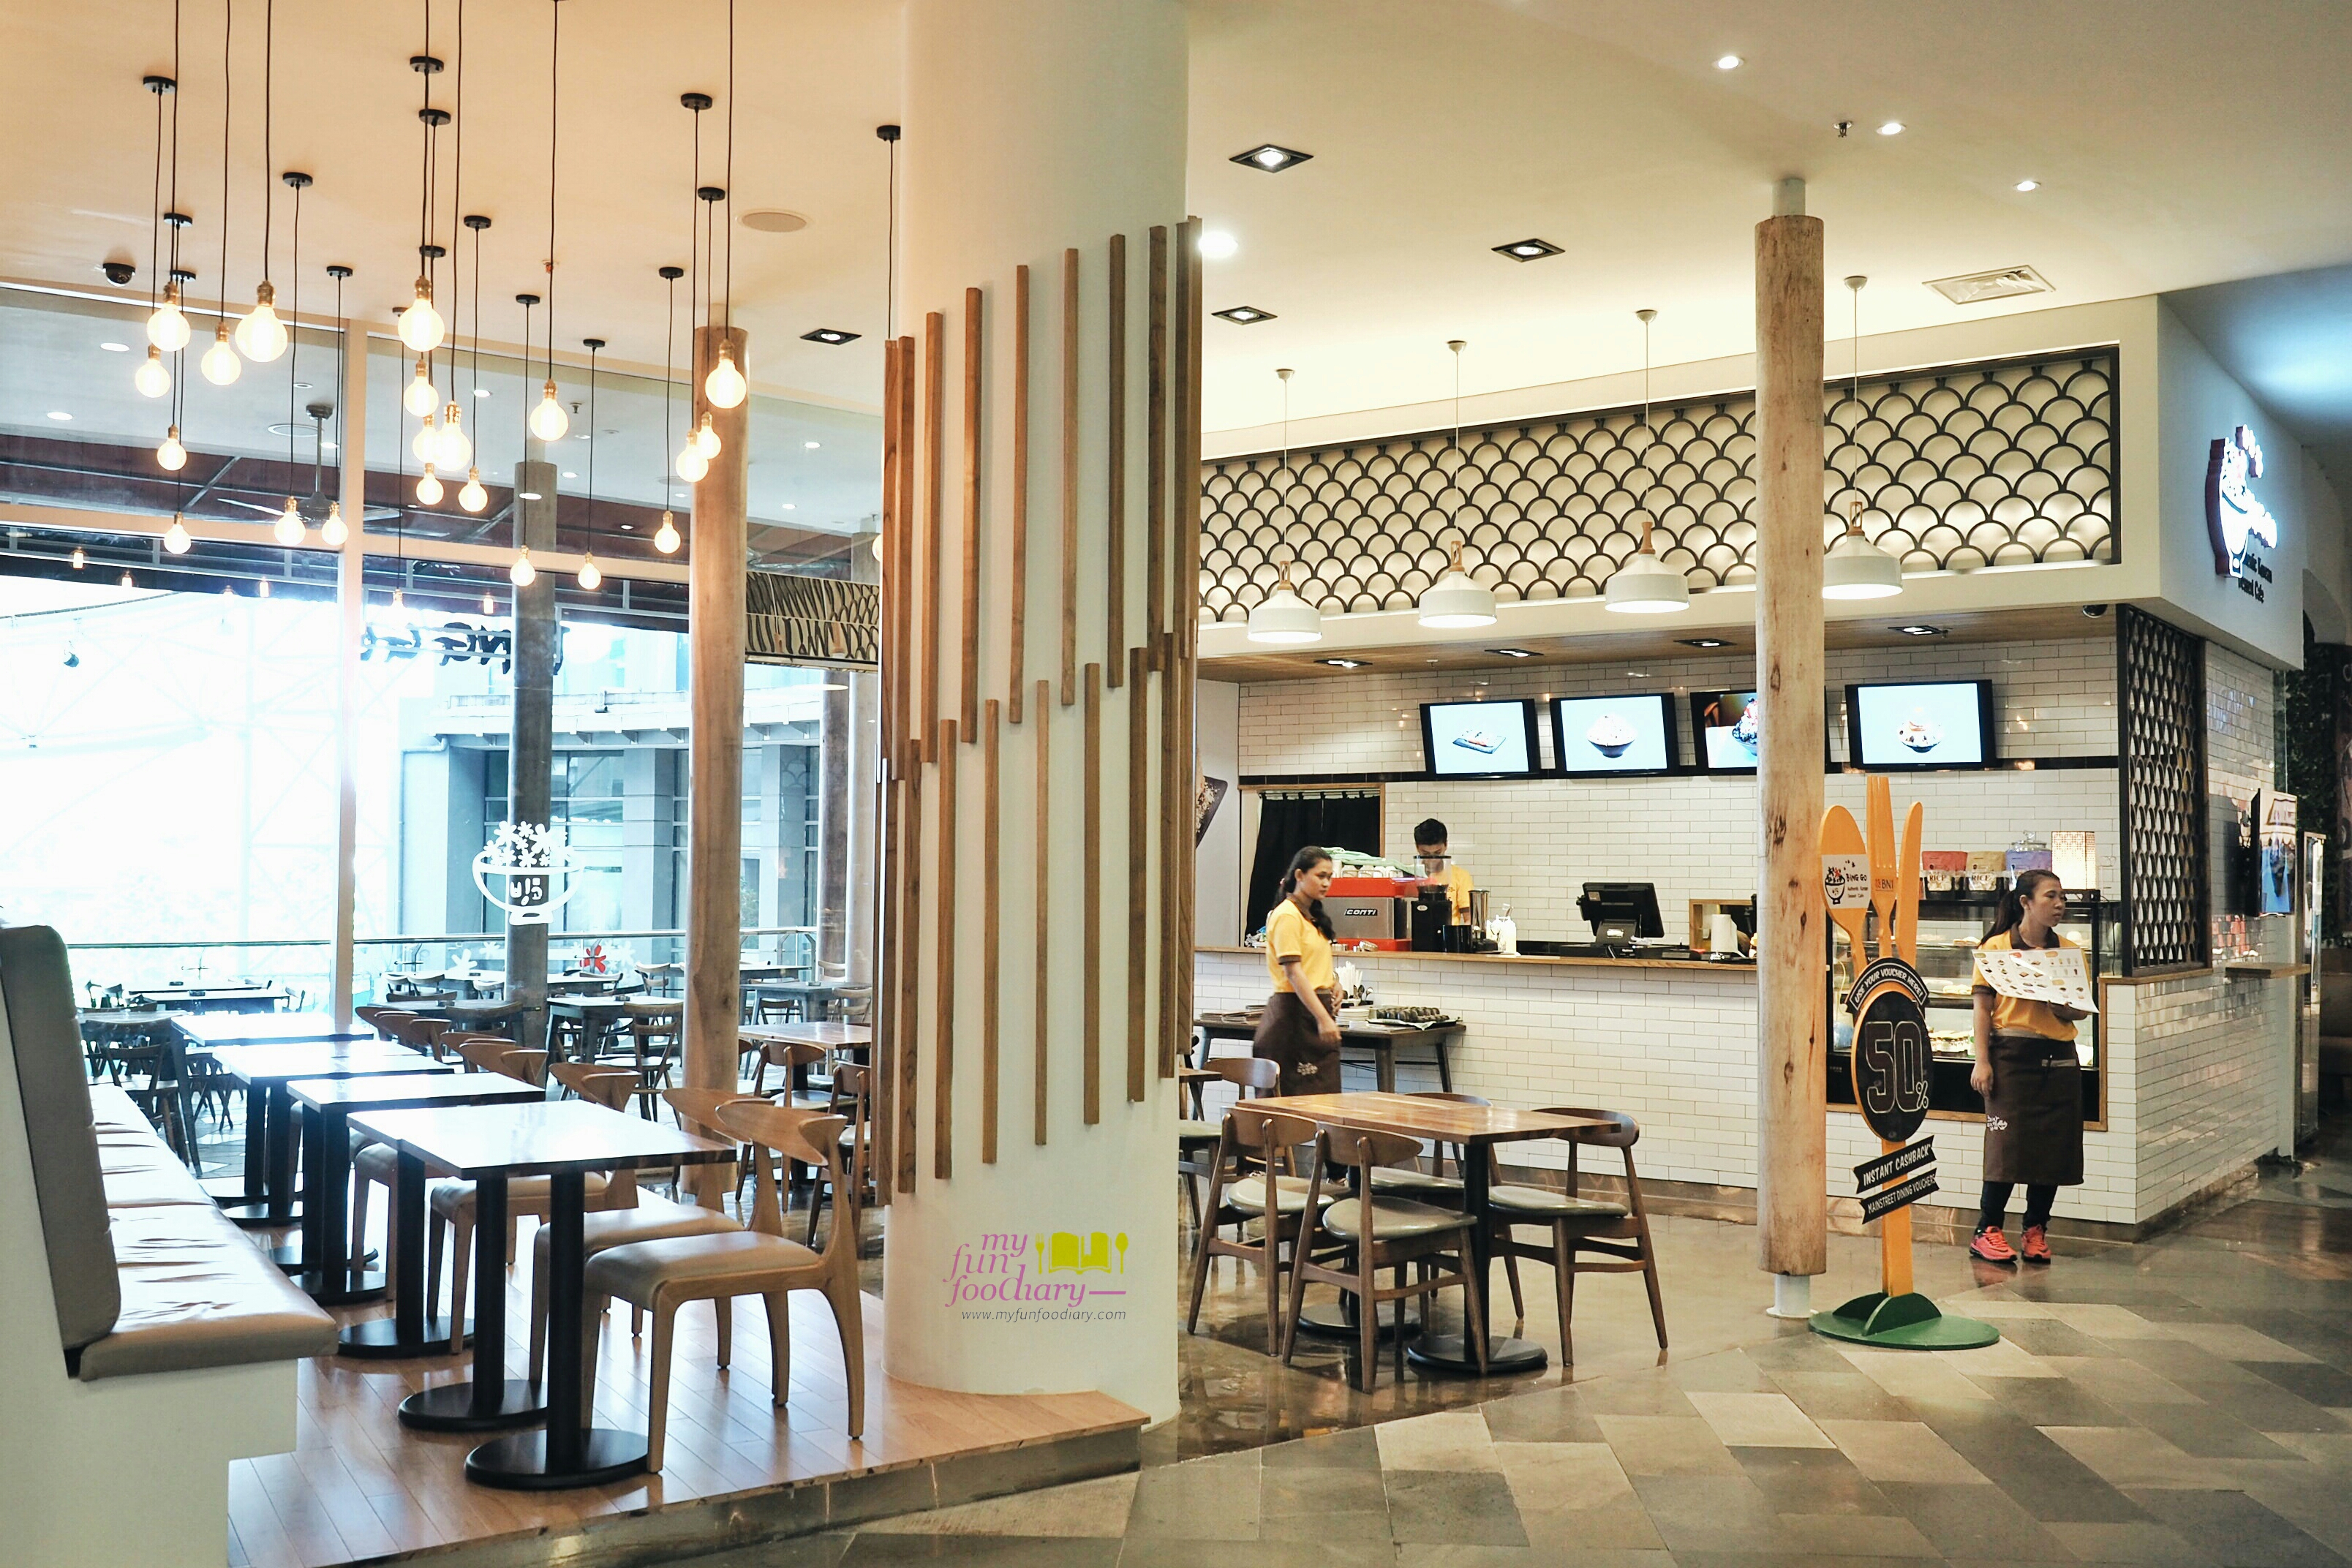 Suasana Indoor Bing Go Korean Dessert Cafe by Myfunfoodiary 01